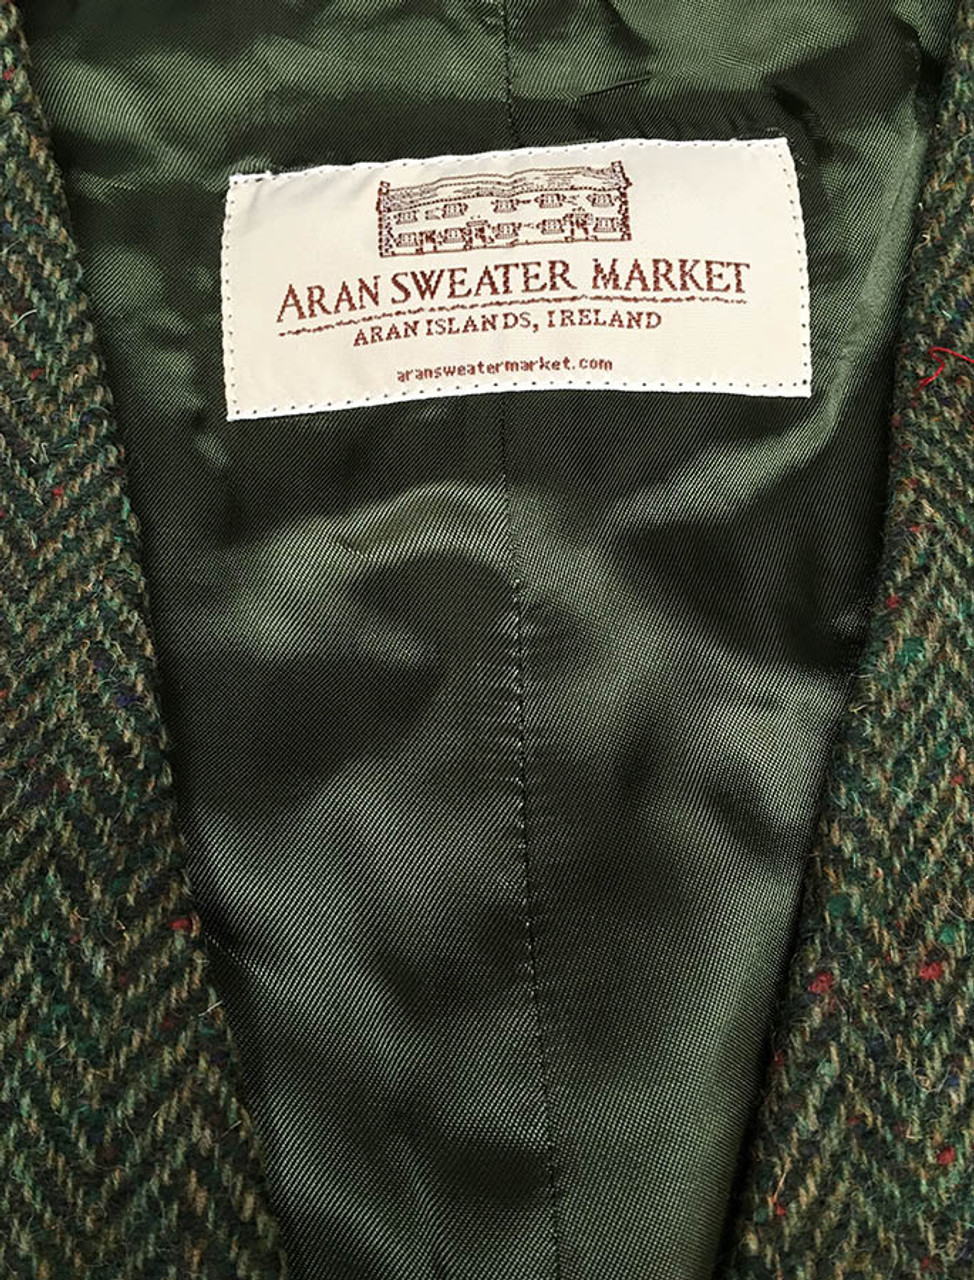 Donegal Irish Tweed Waistcoat From Weavers Of Ireland [Best Selling]